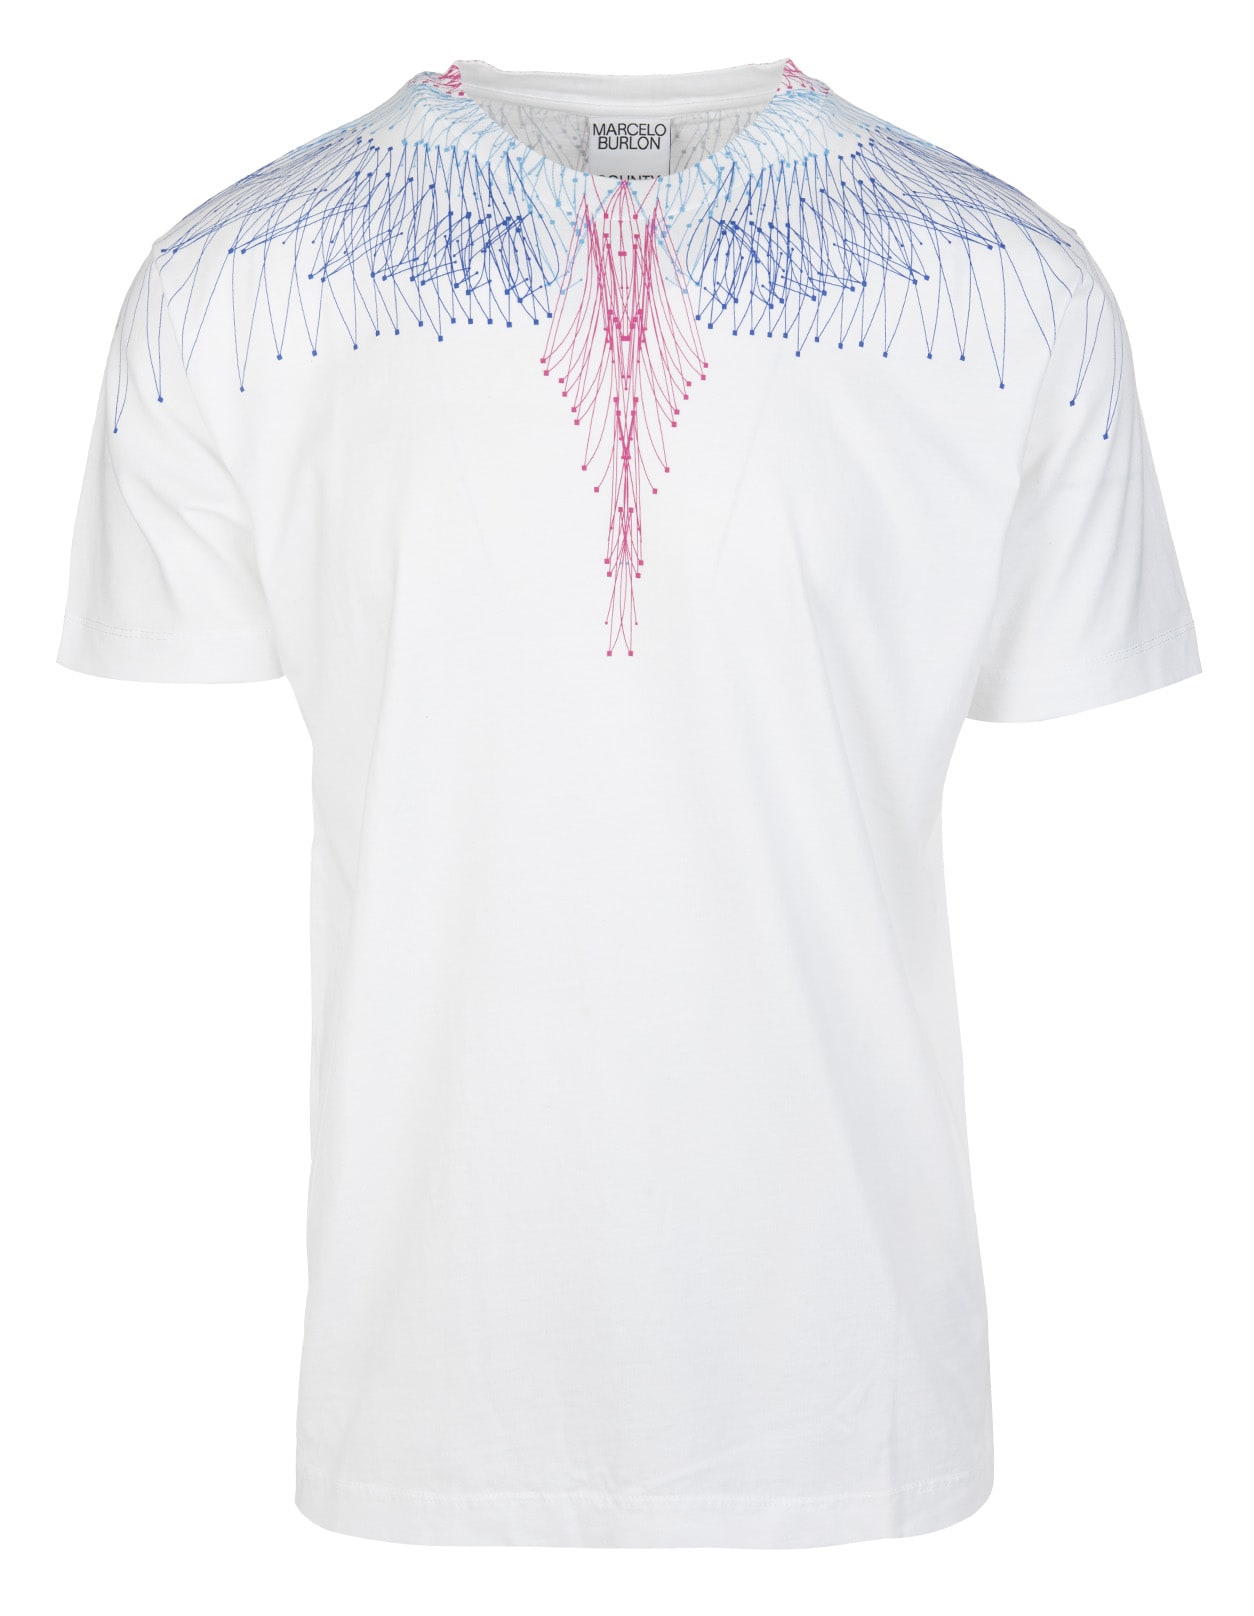 Marcelo Burlon Man Bezier Wings White T-shirt